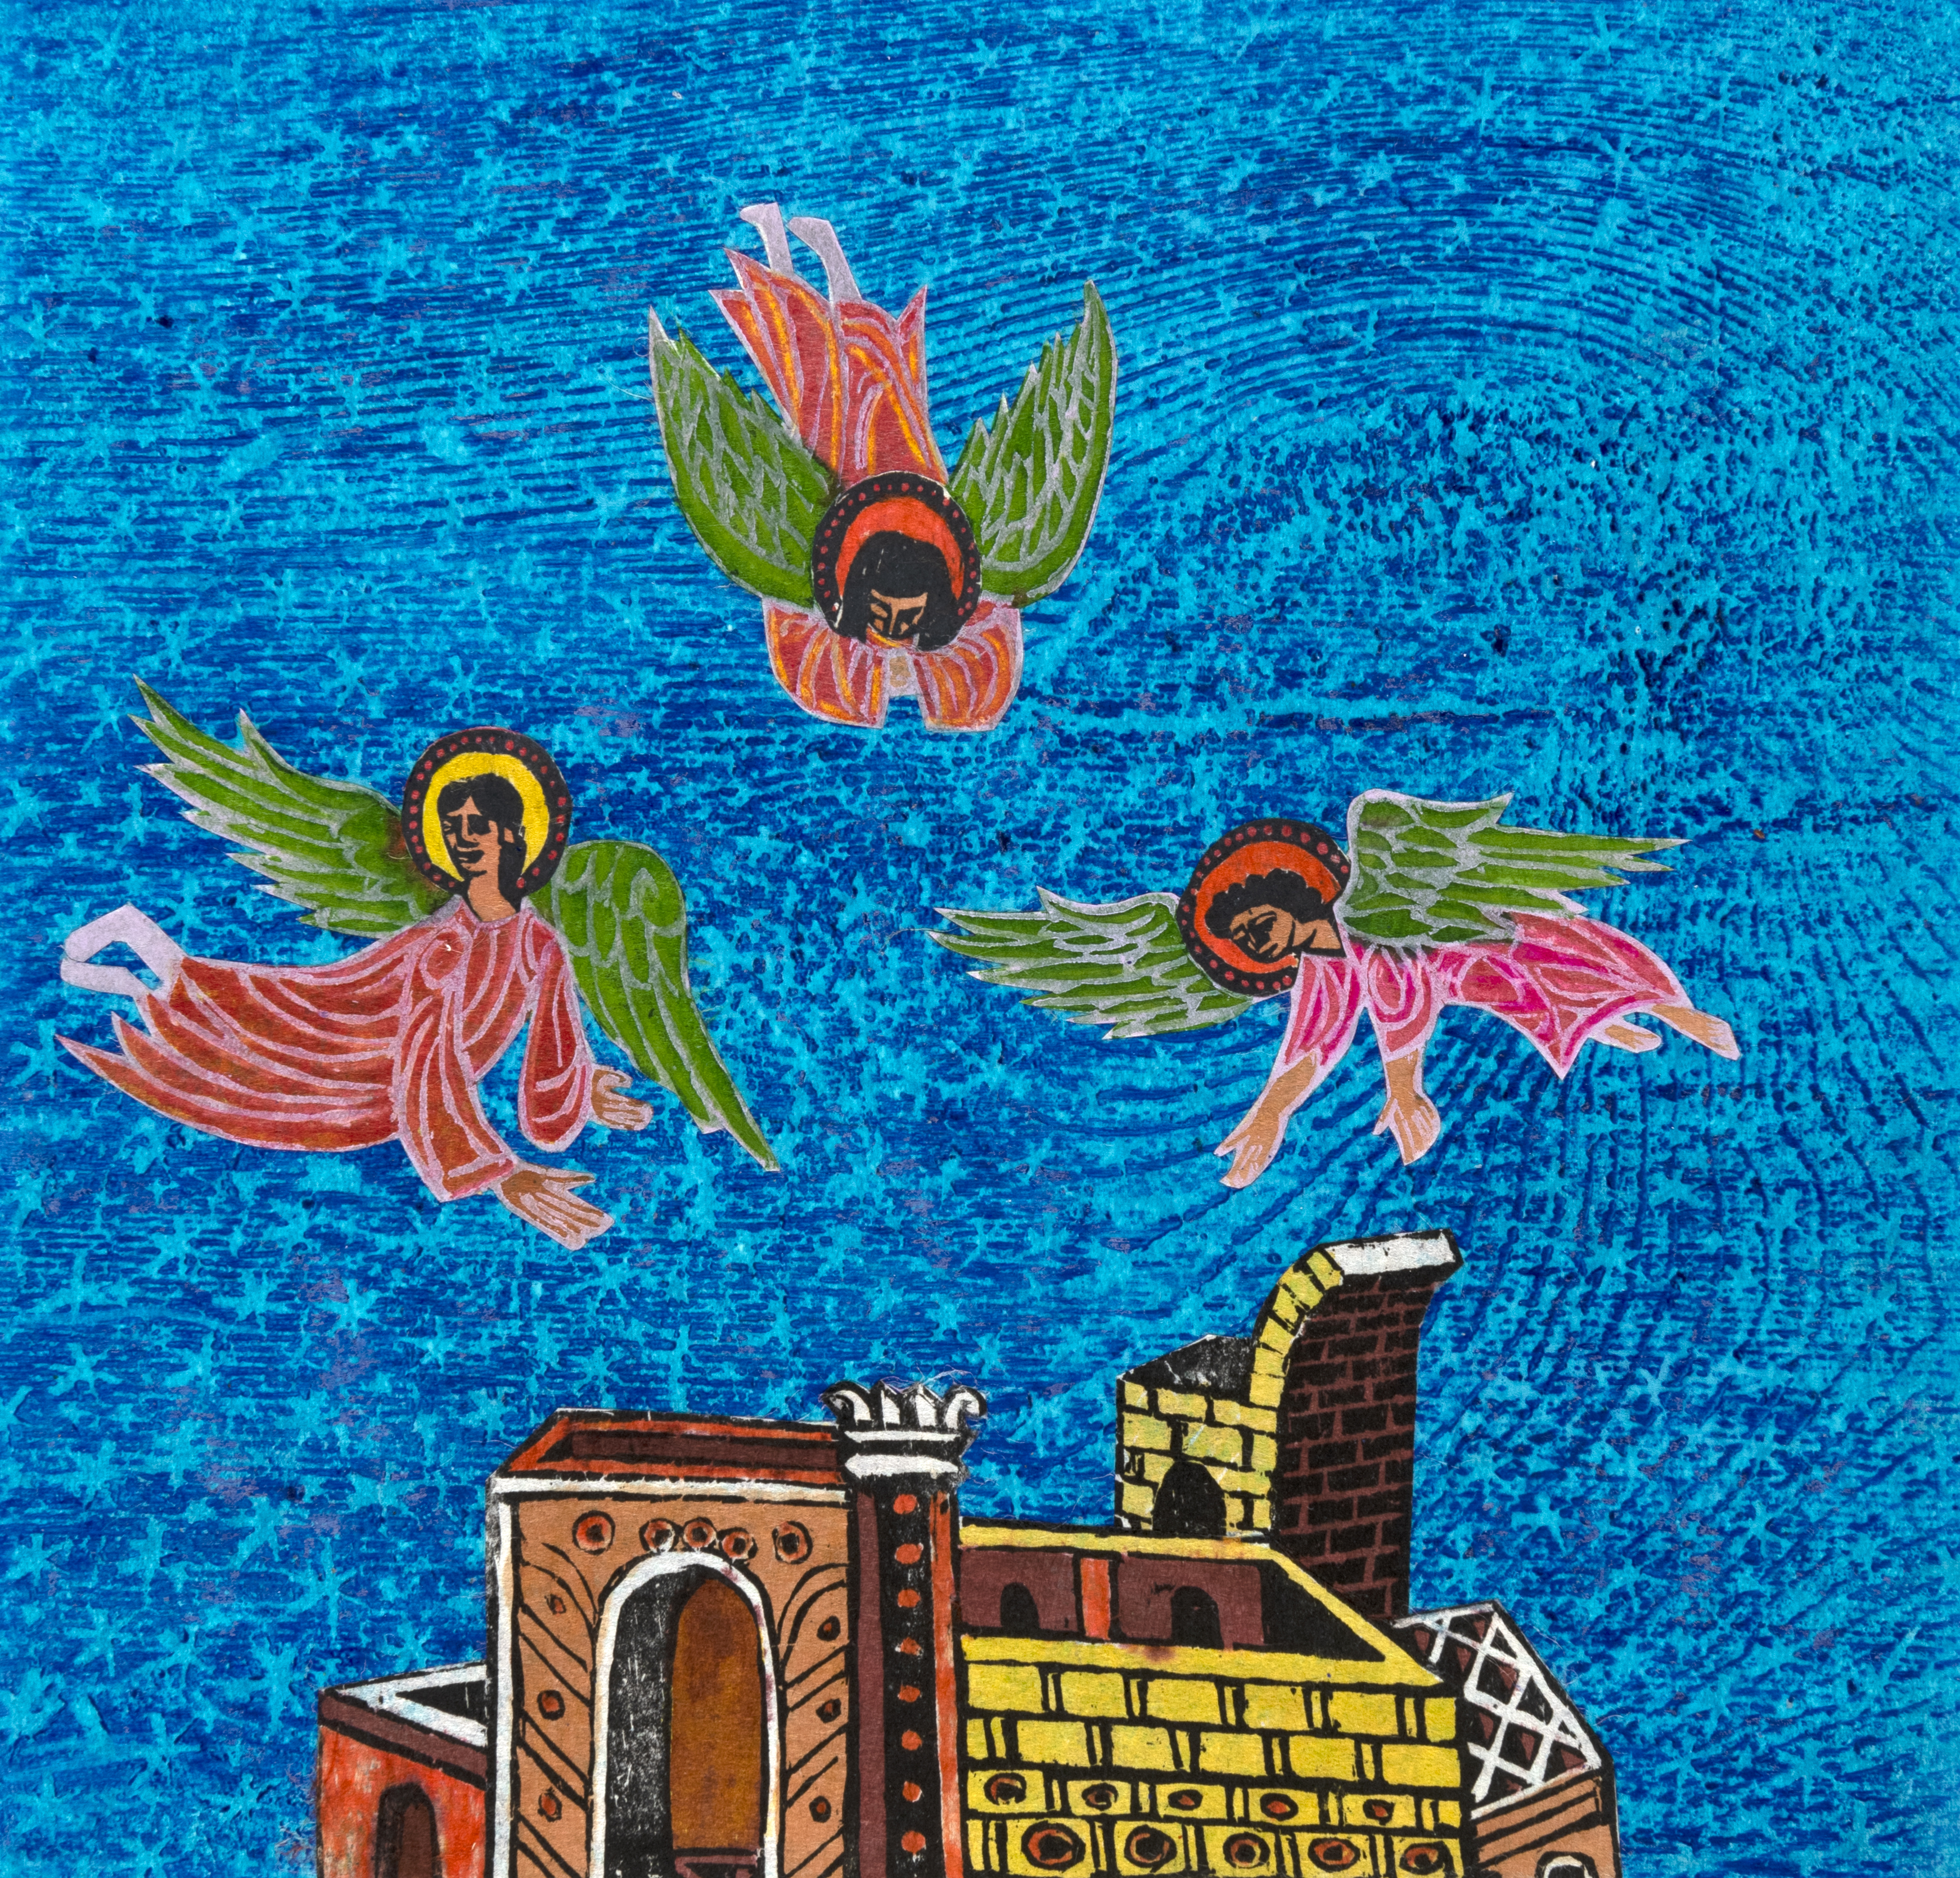 Illustration of angels flying over building.